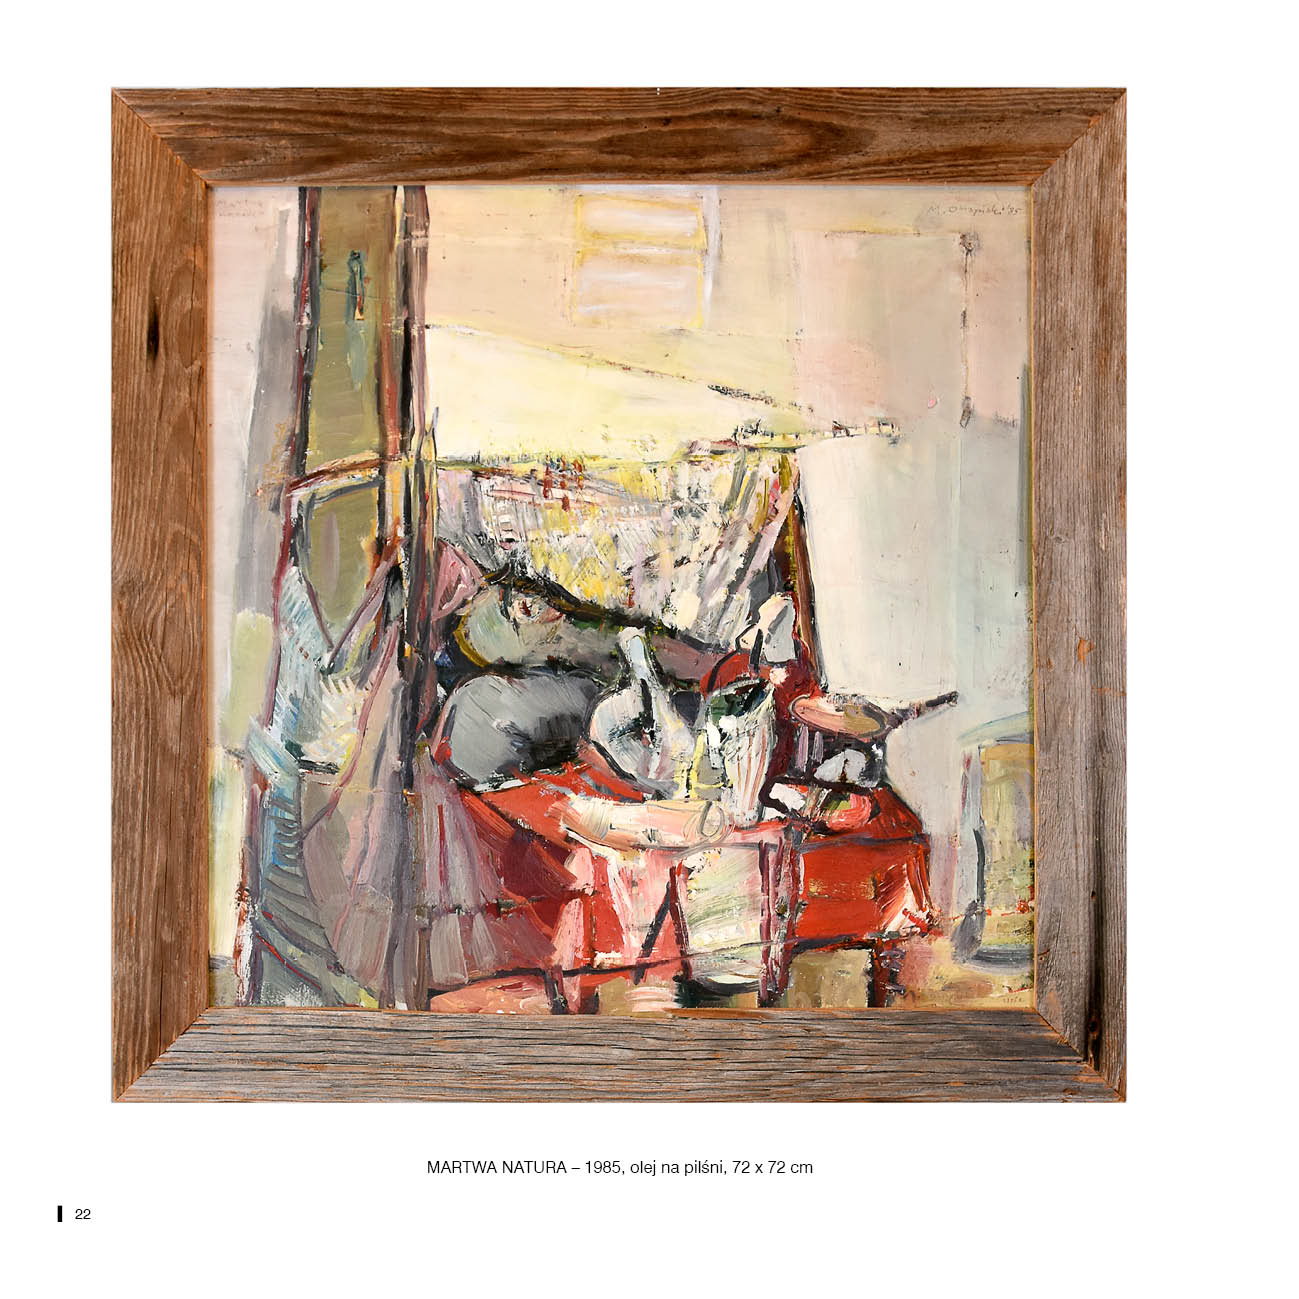 MARTWA NATURA – 1985, olej na pilśni, 72 x 72 cm